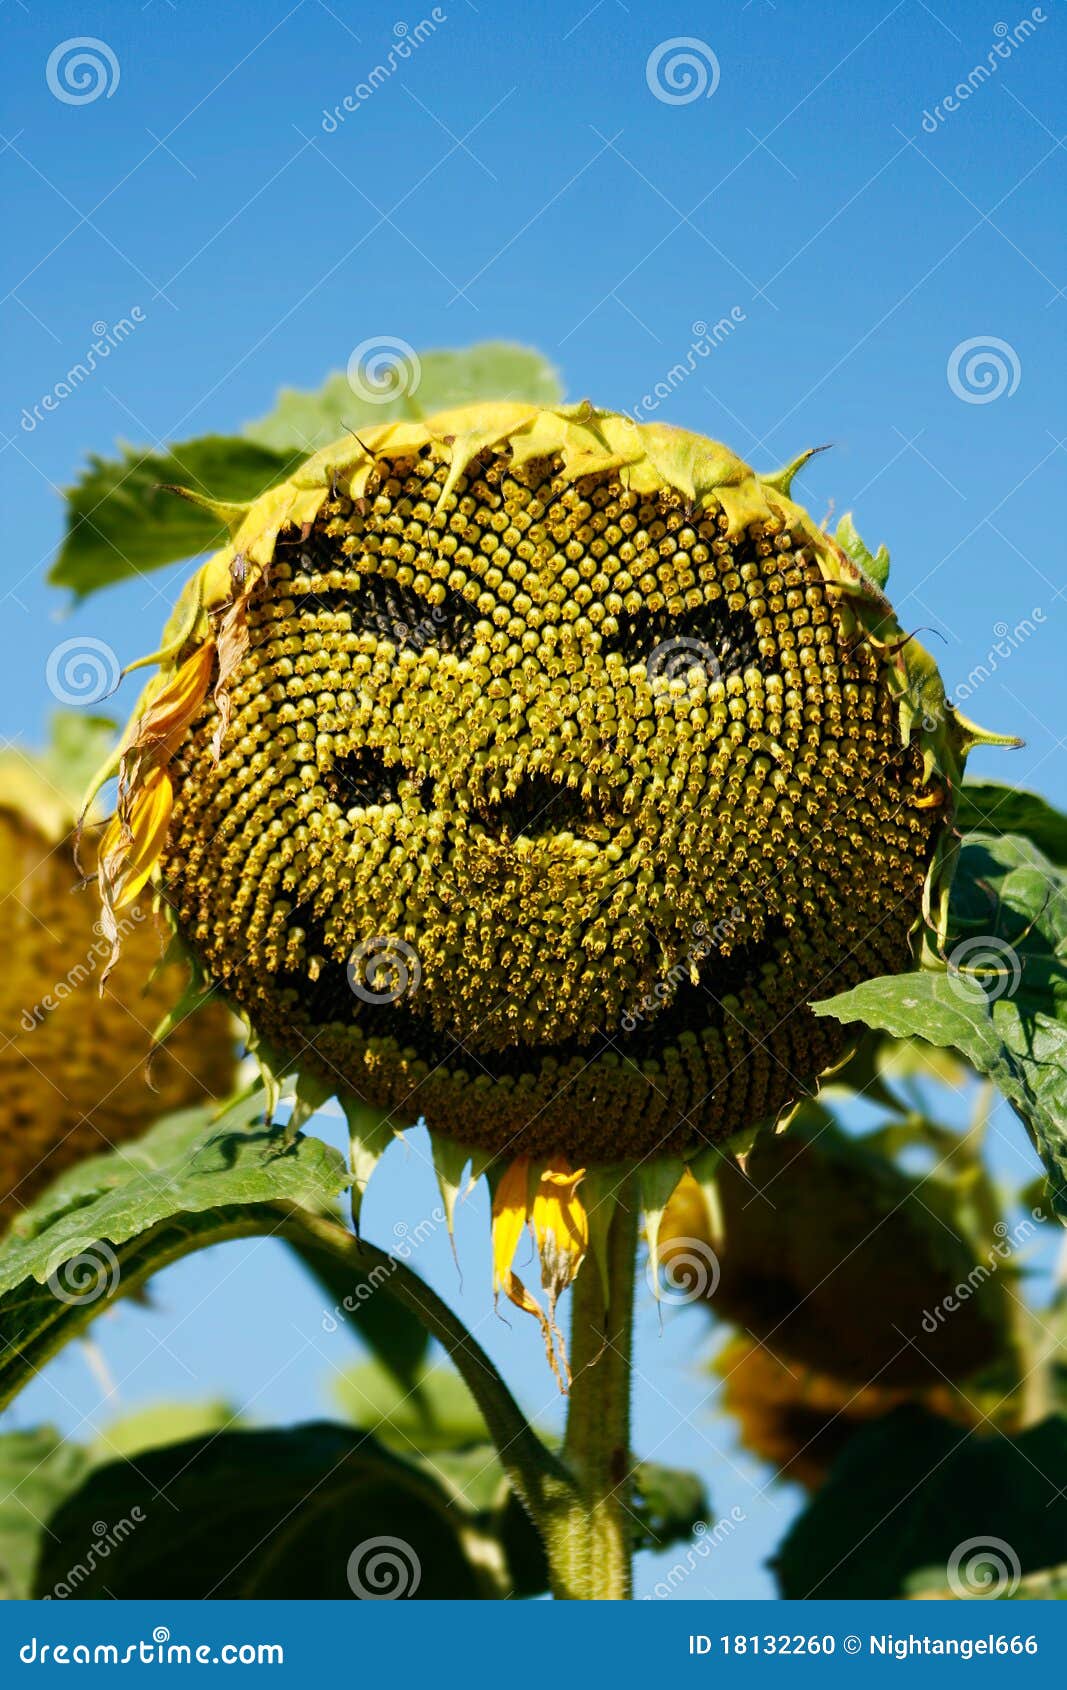 Halloween sun flower stock photo. Image of nature, shape - 18132260